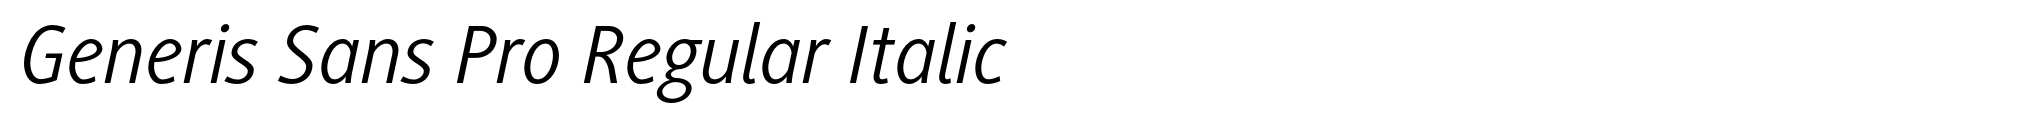 Generis Sans Pro Regular Italic image